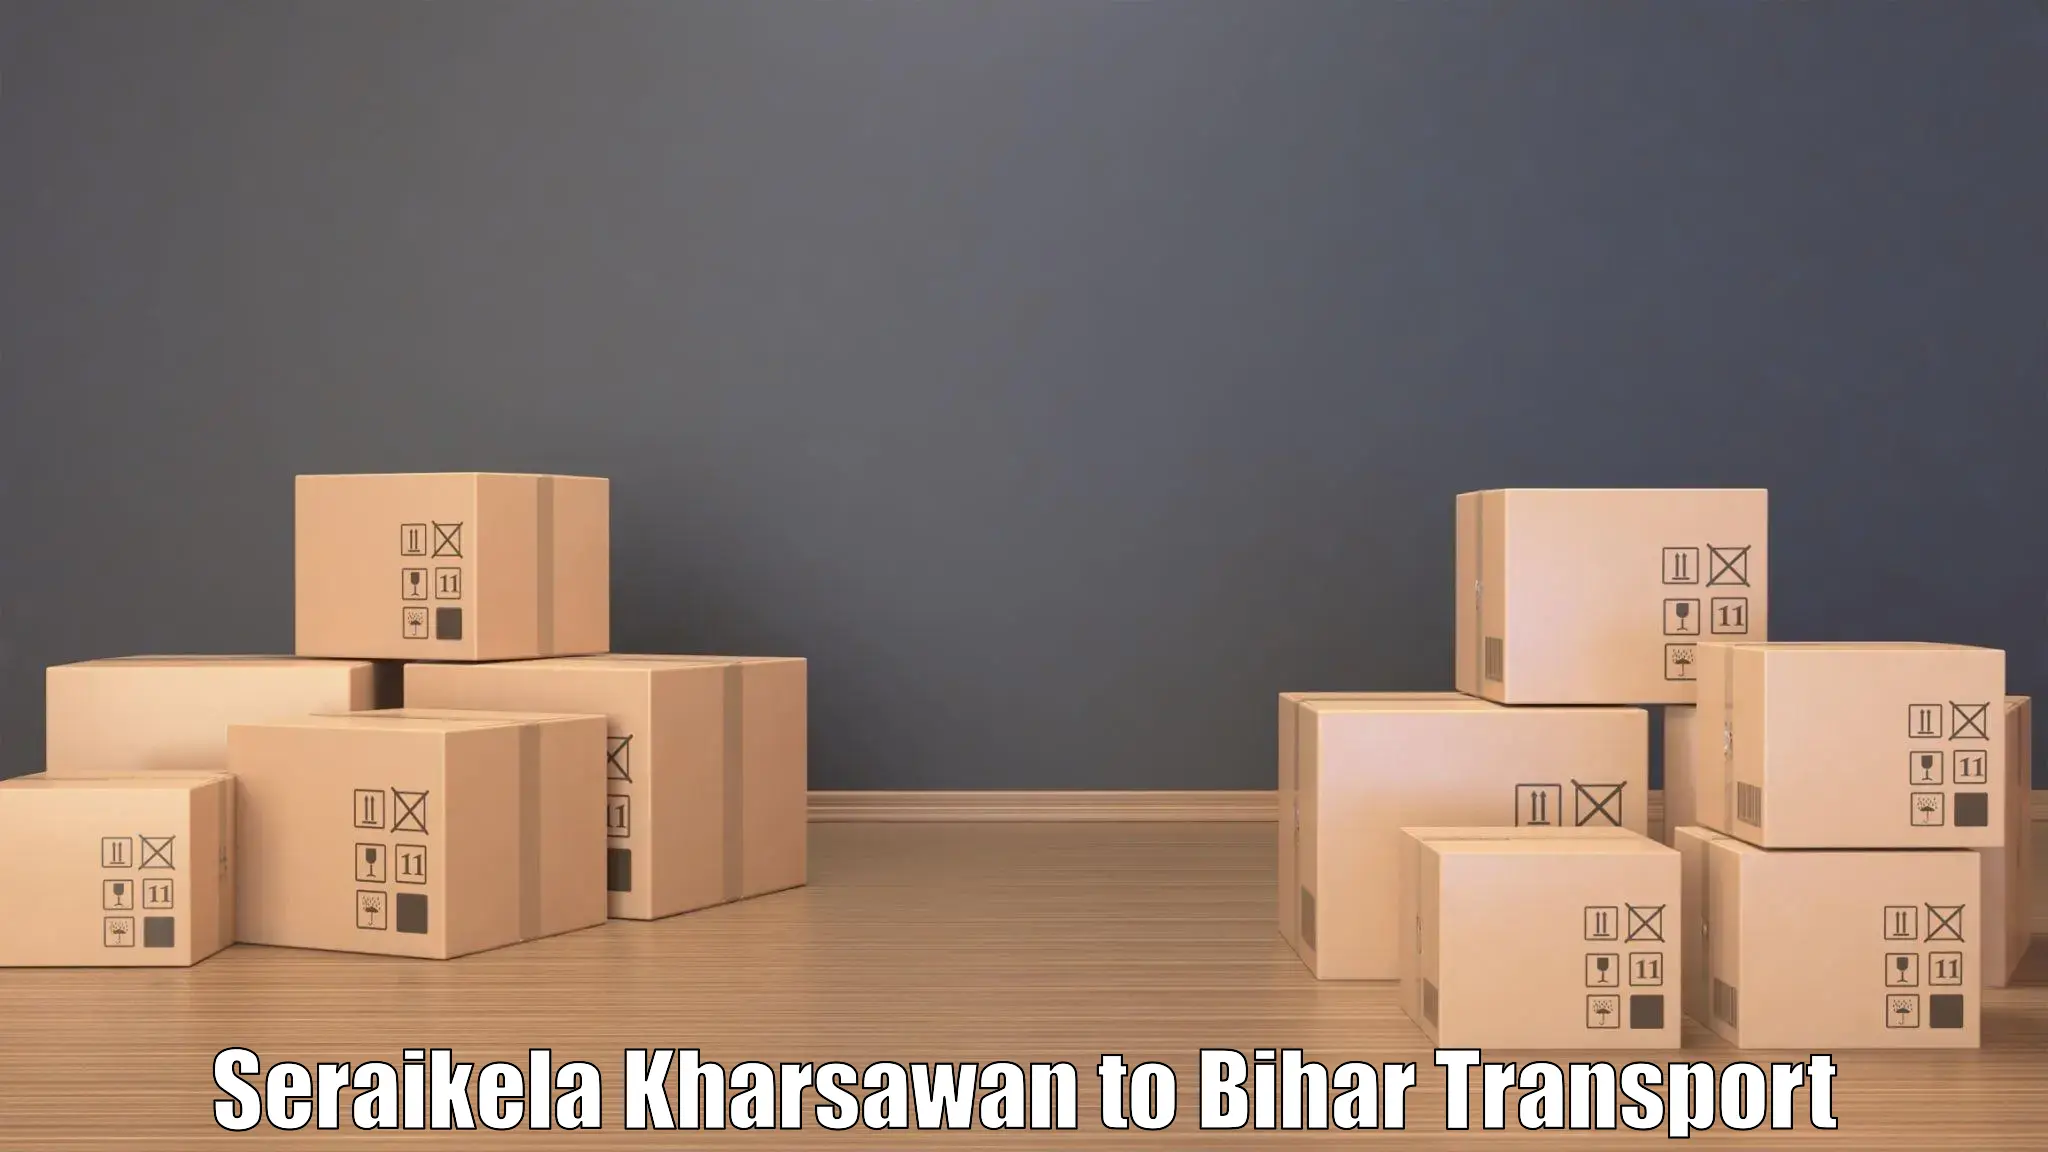 Truck transport companies in India Seraikela Kharsawan to Kudra